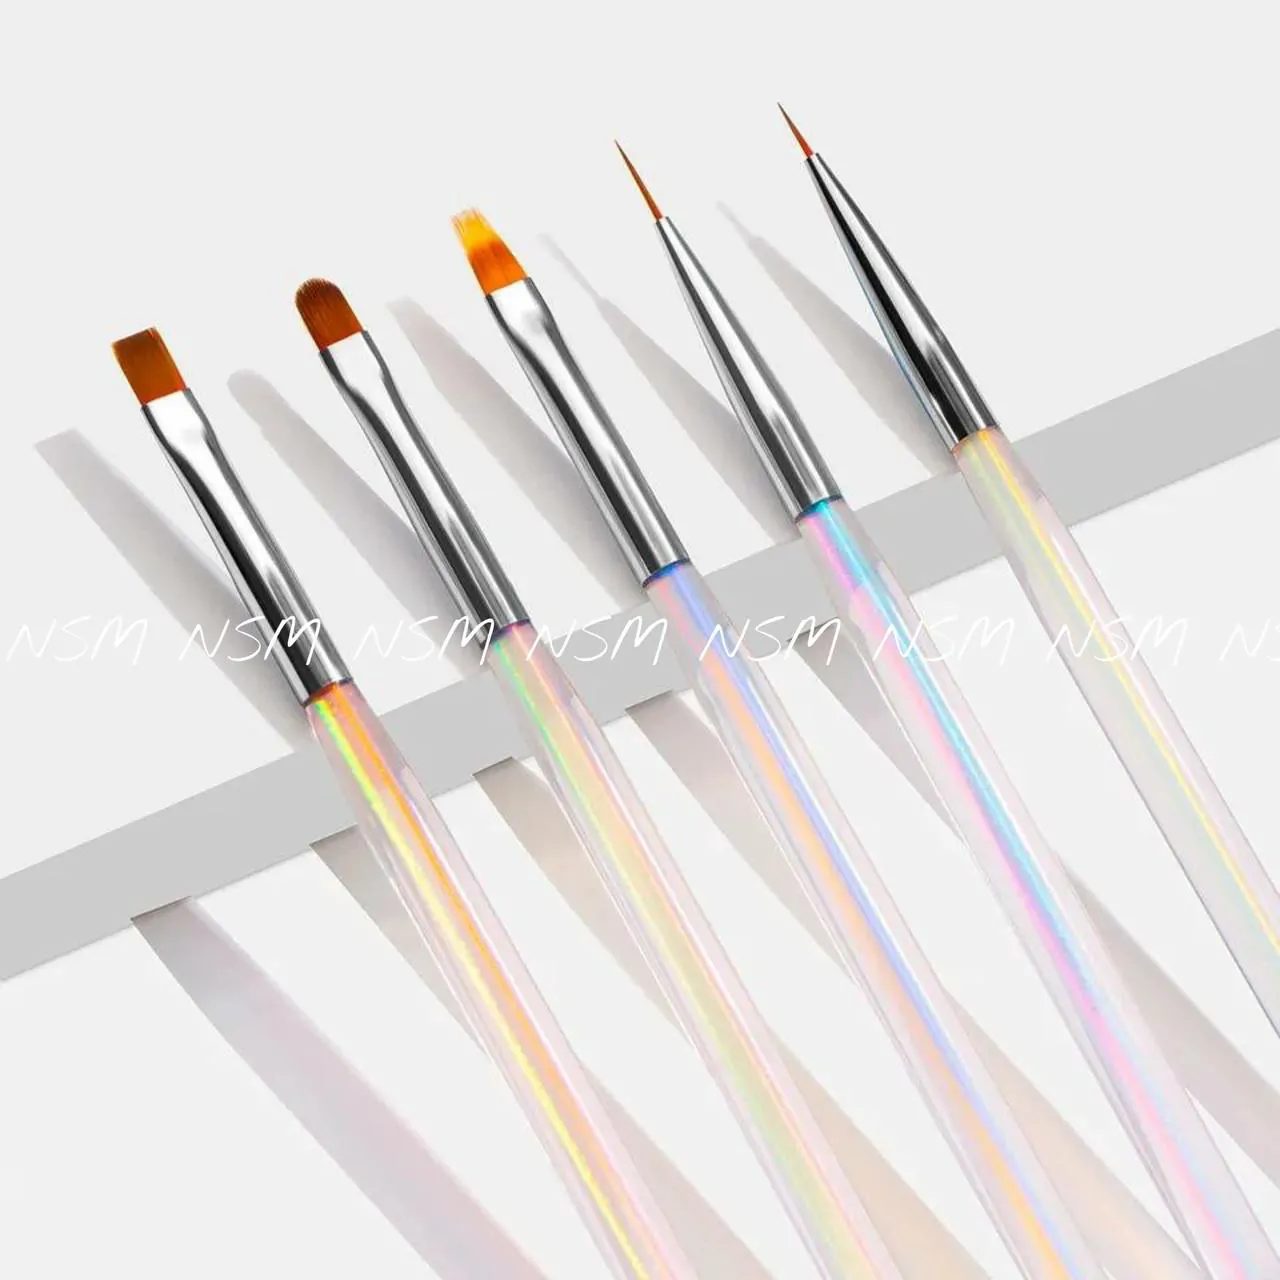 Nail Art Brushes Set for Nail Design | MelodySusie